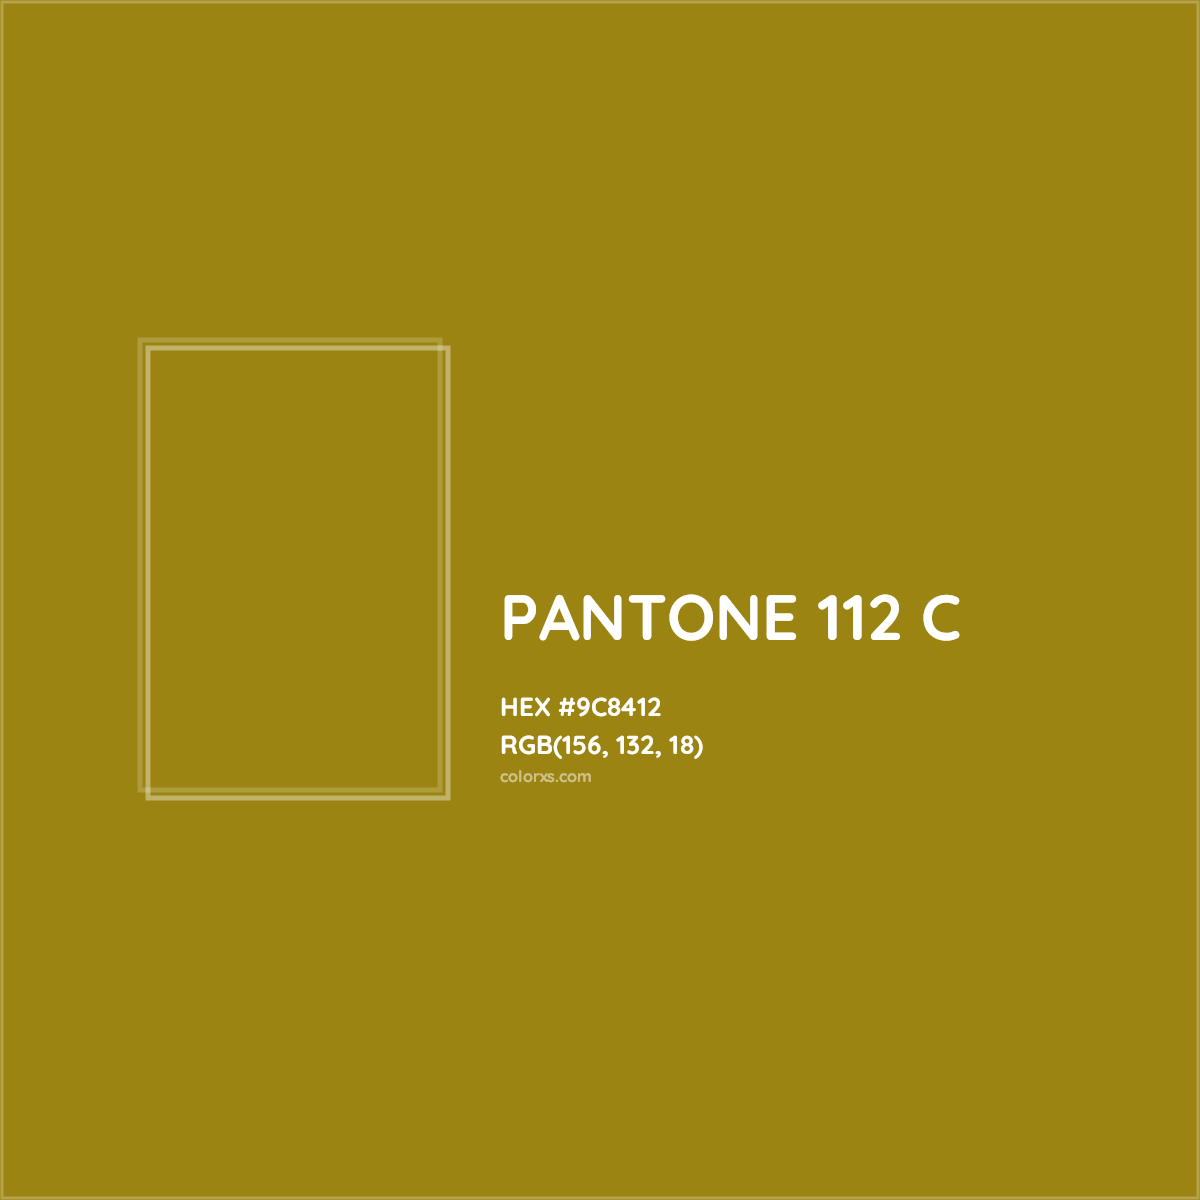 HEX #9C8412 PANTONE 112 C CMS Pantone PMS - Color Code